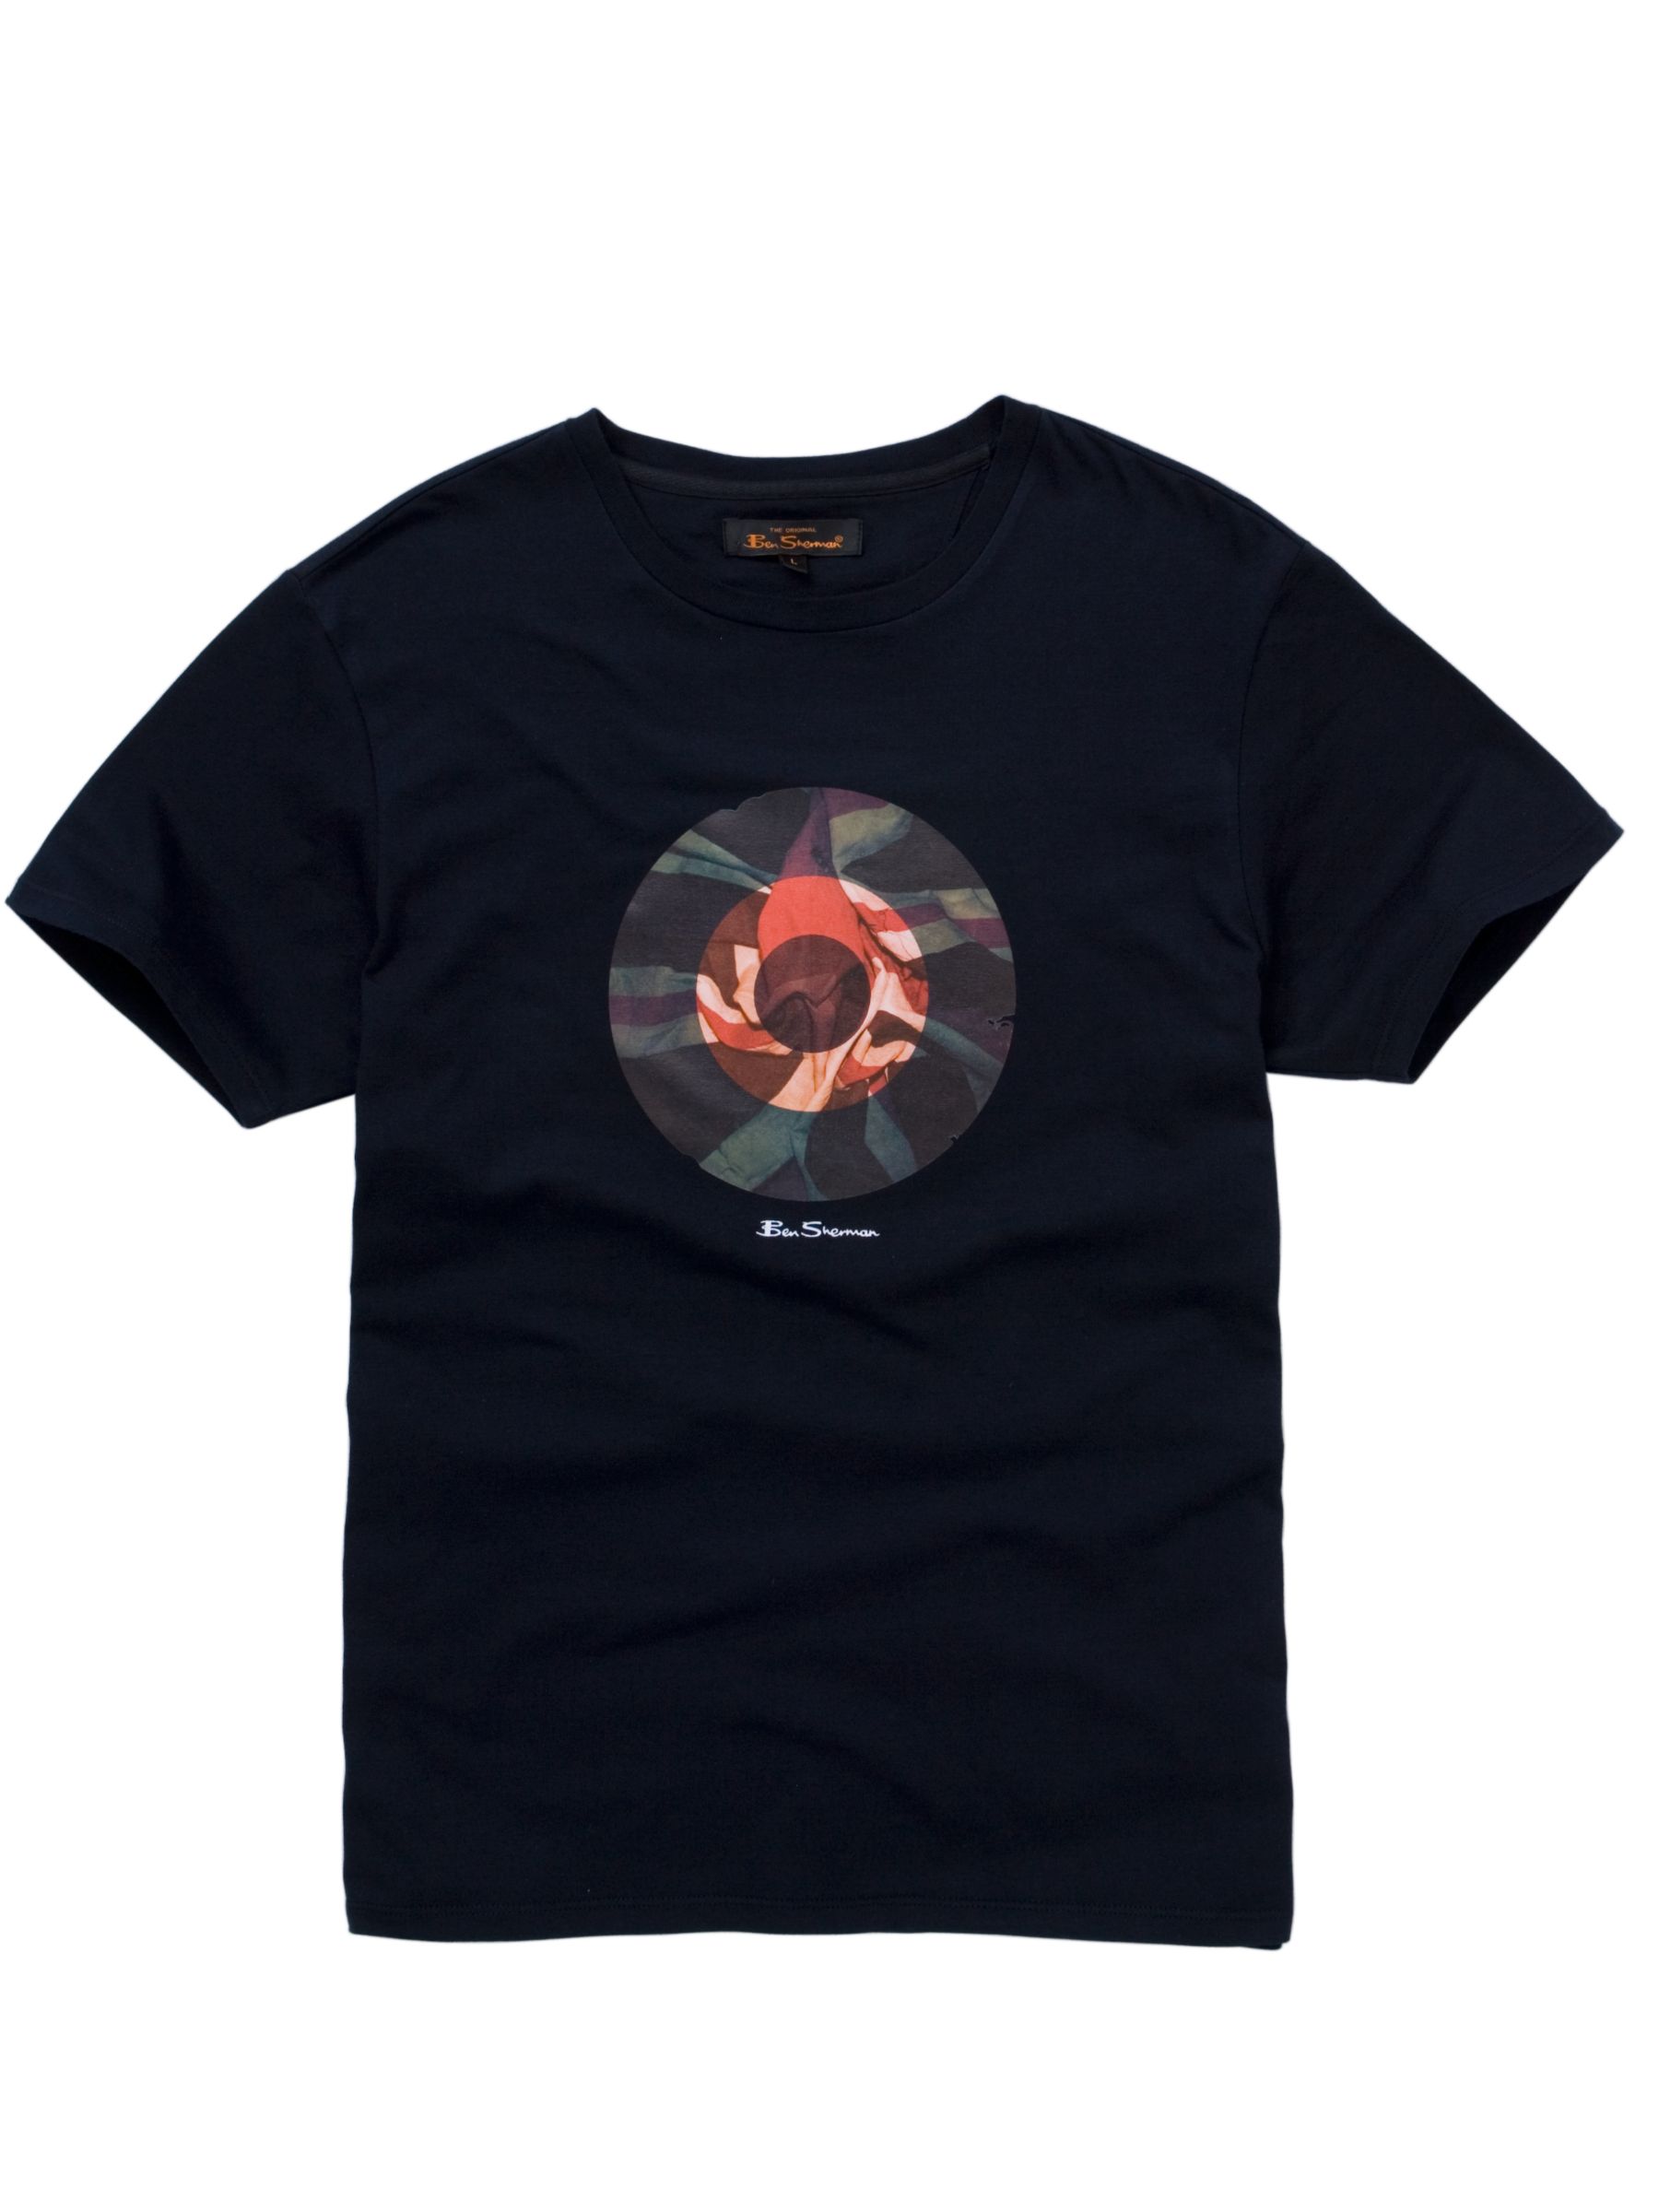 Target Print T-Shirt, Navy